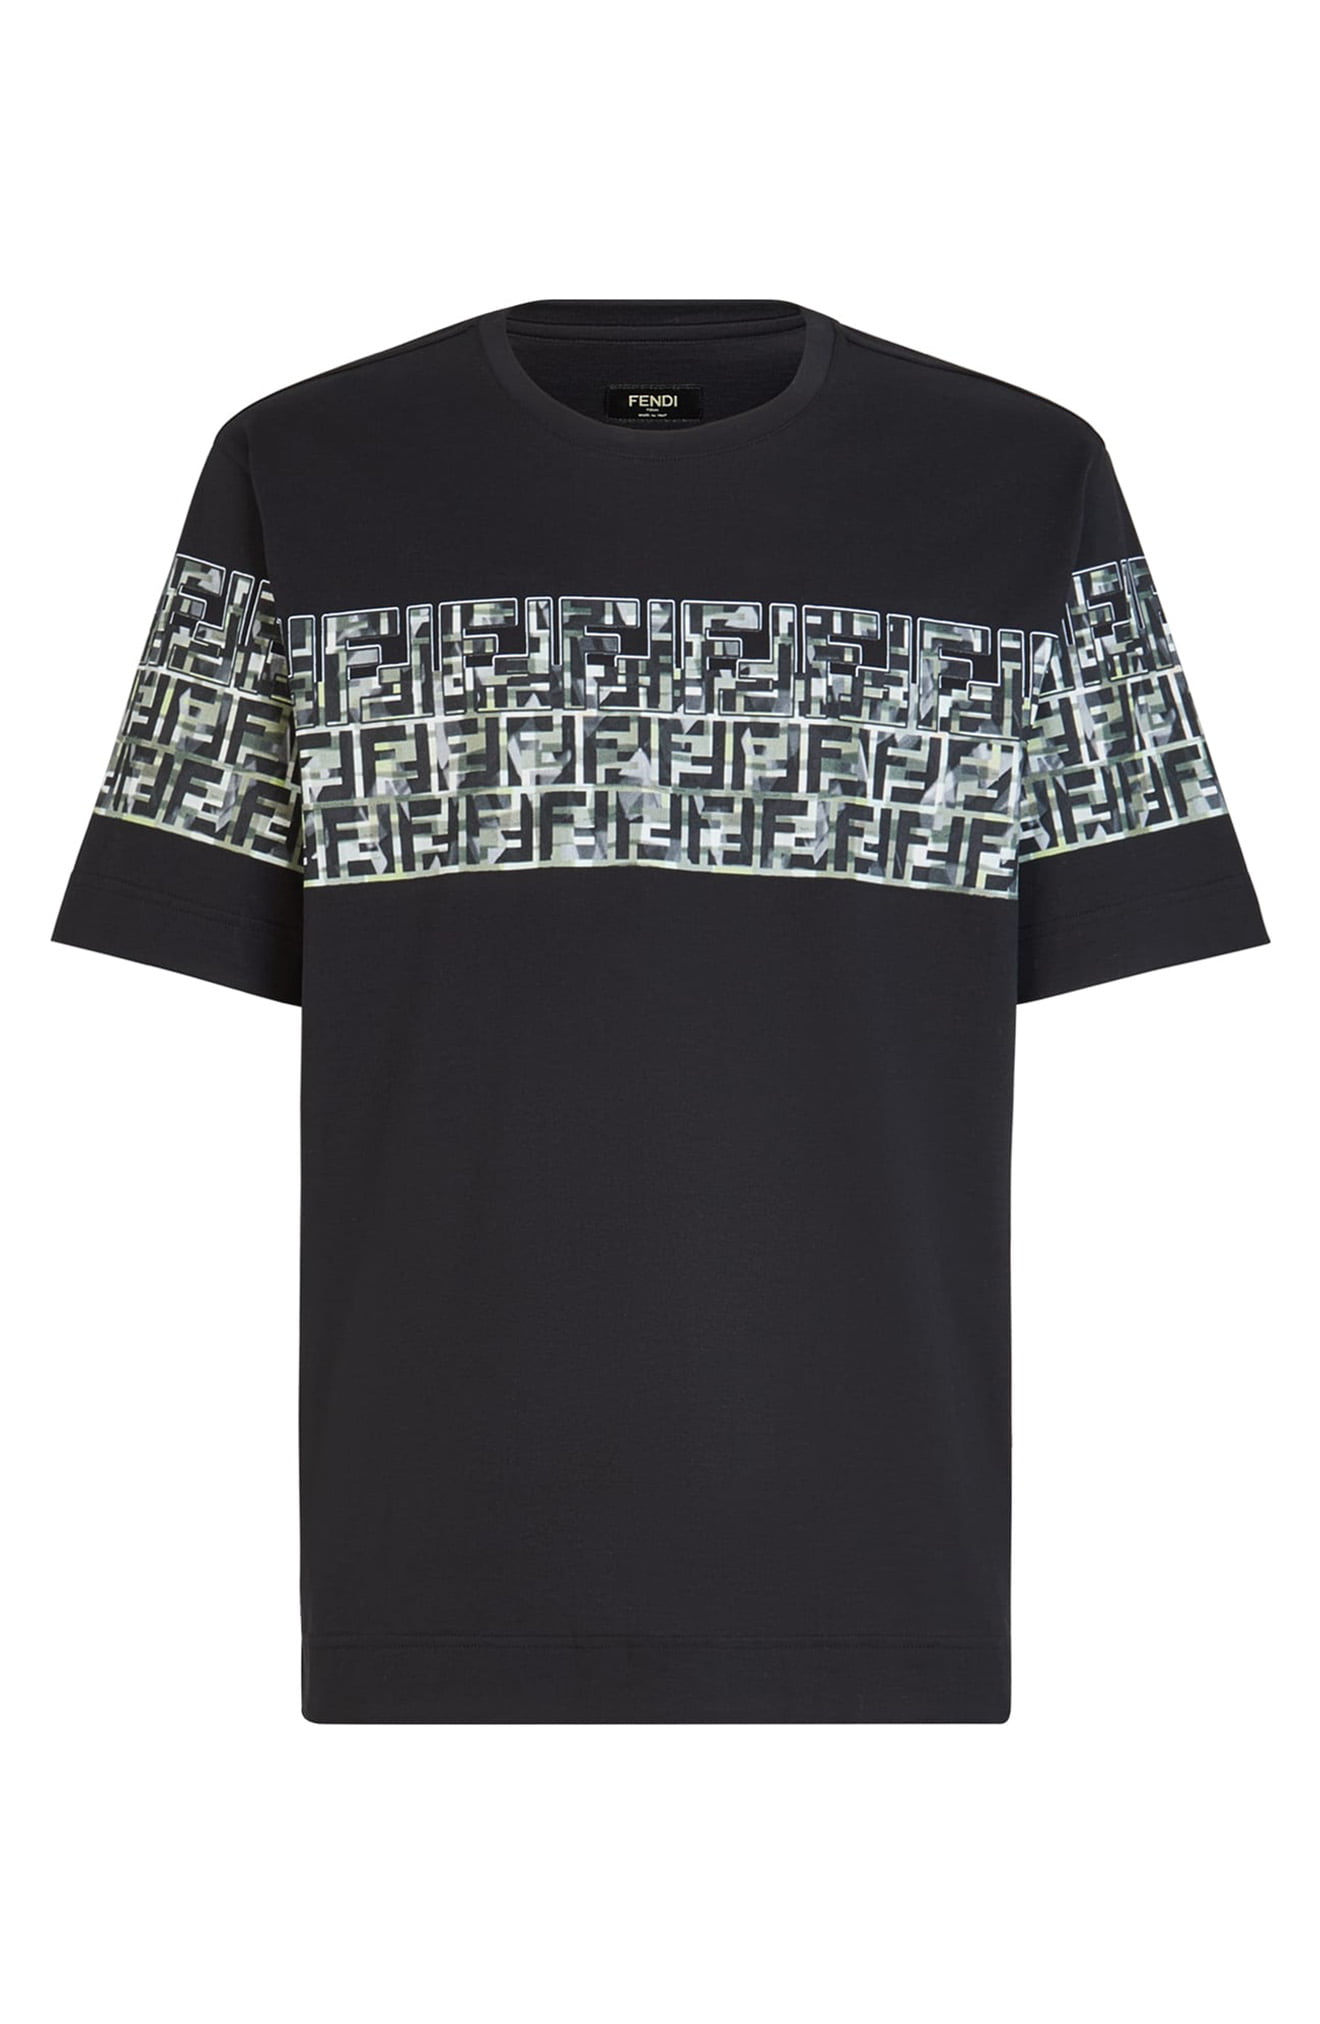 Fendi T Shirt 2020 Flash Sales, UP TO 66% OFF | www.loop-cn.com